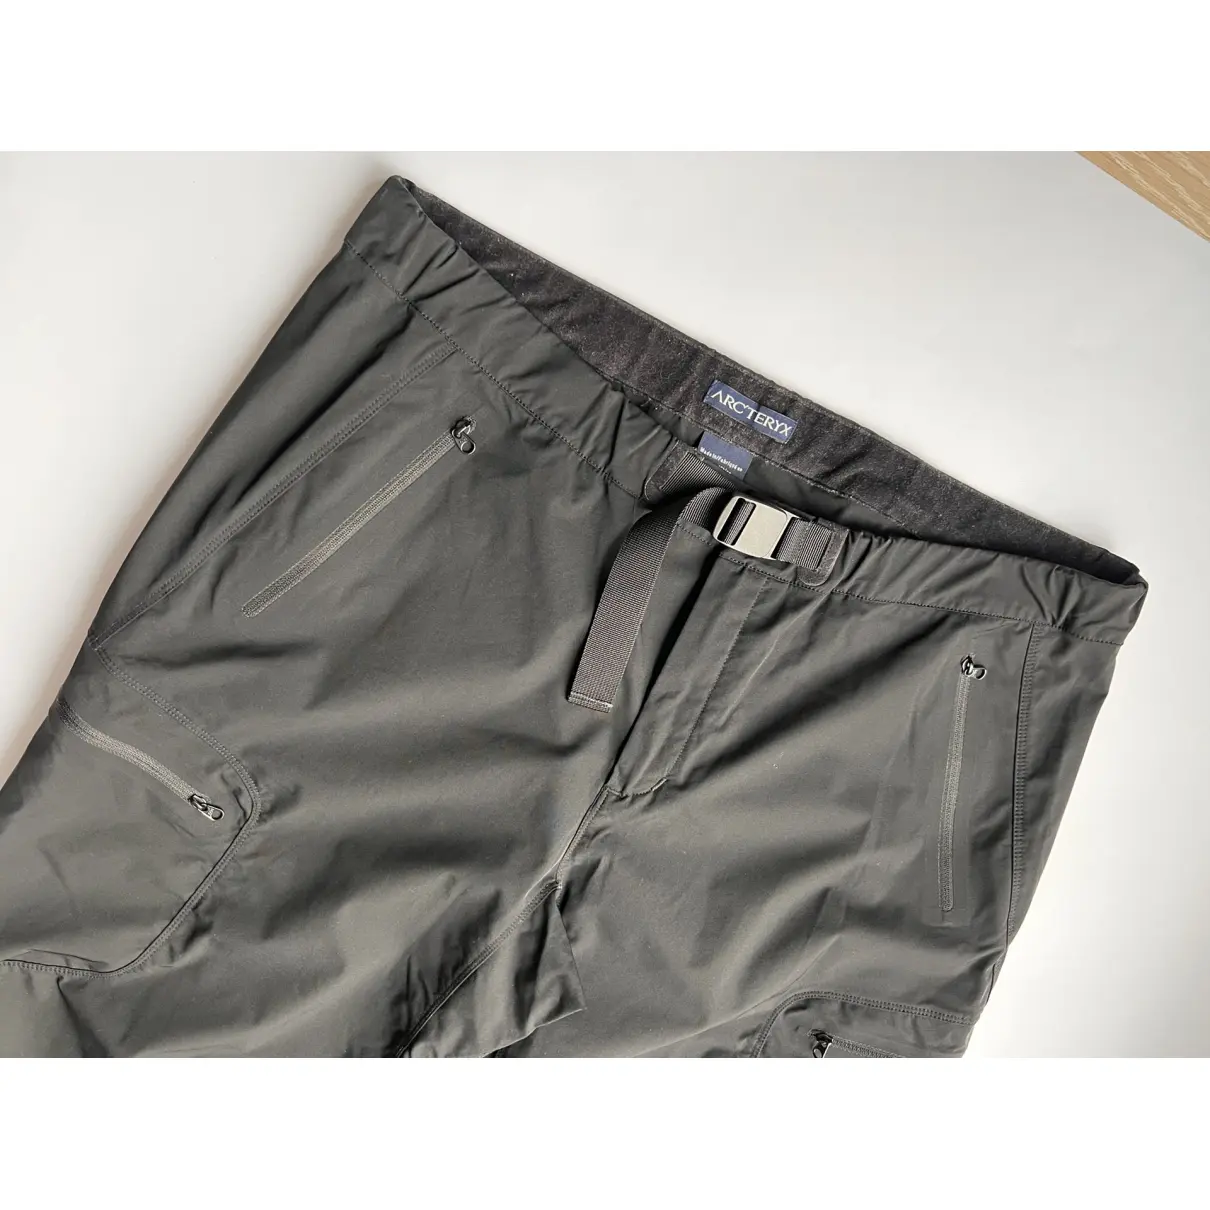 Buy ARC'TERYX Trousers online